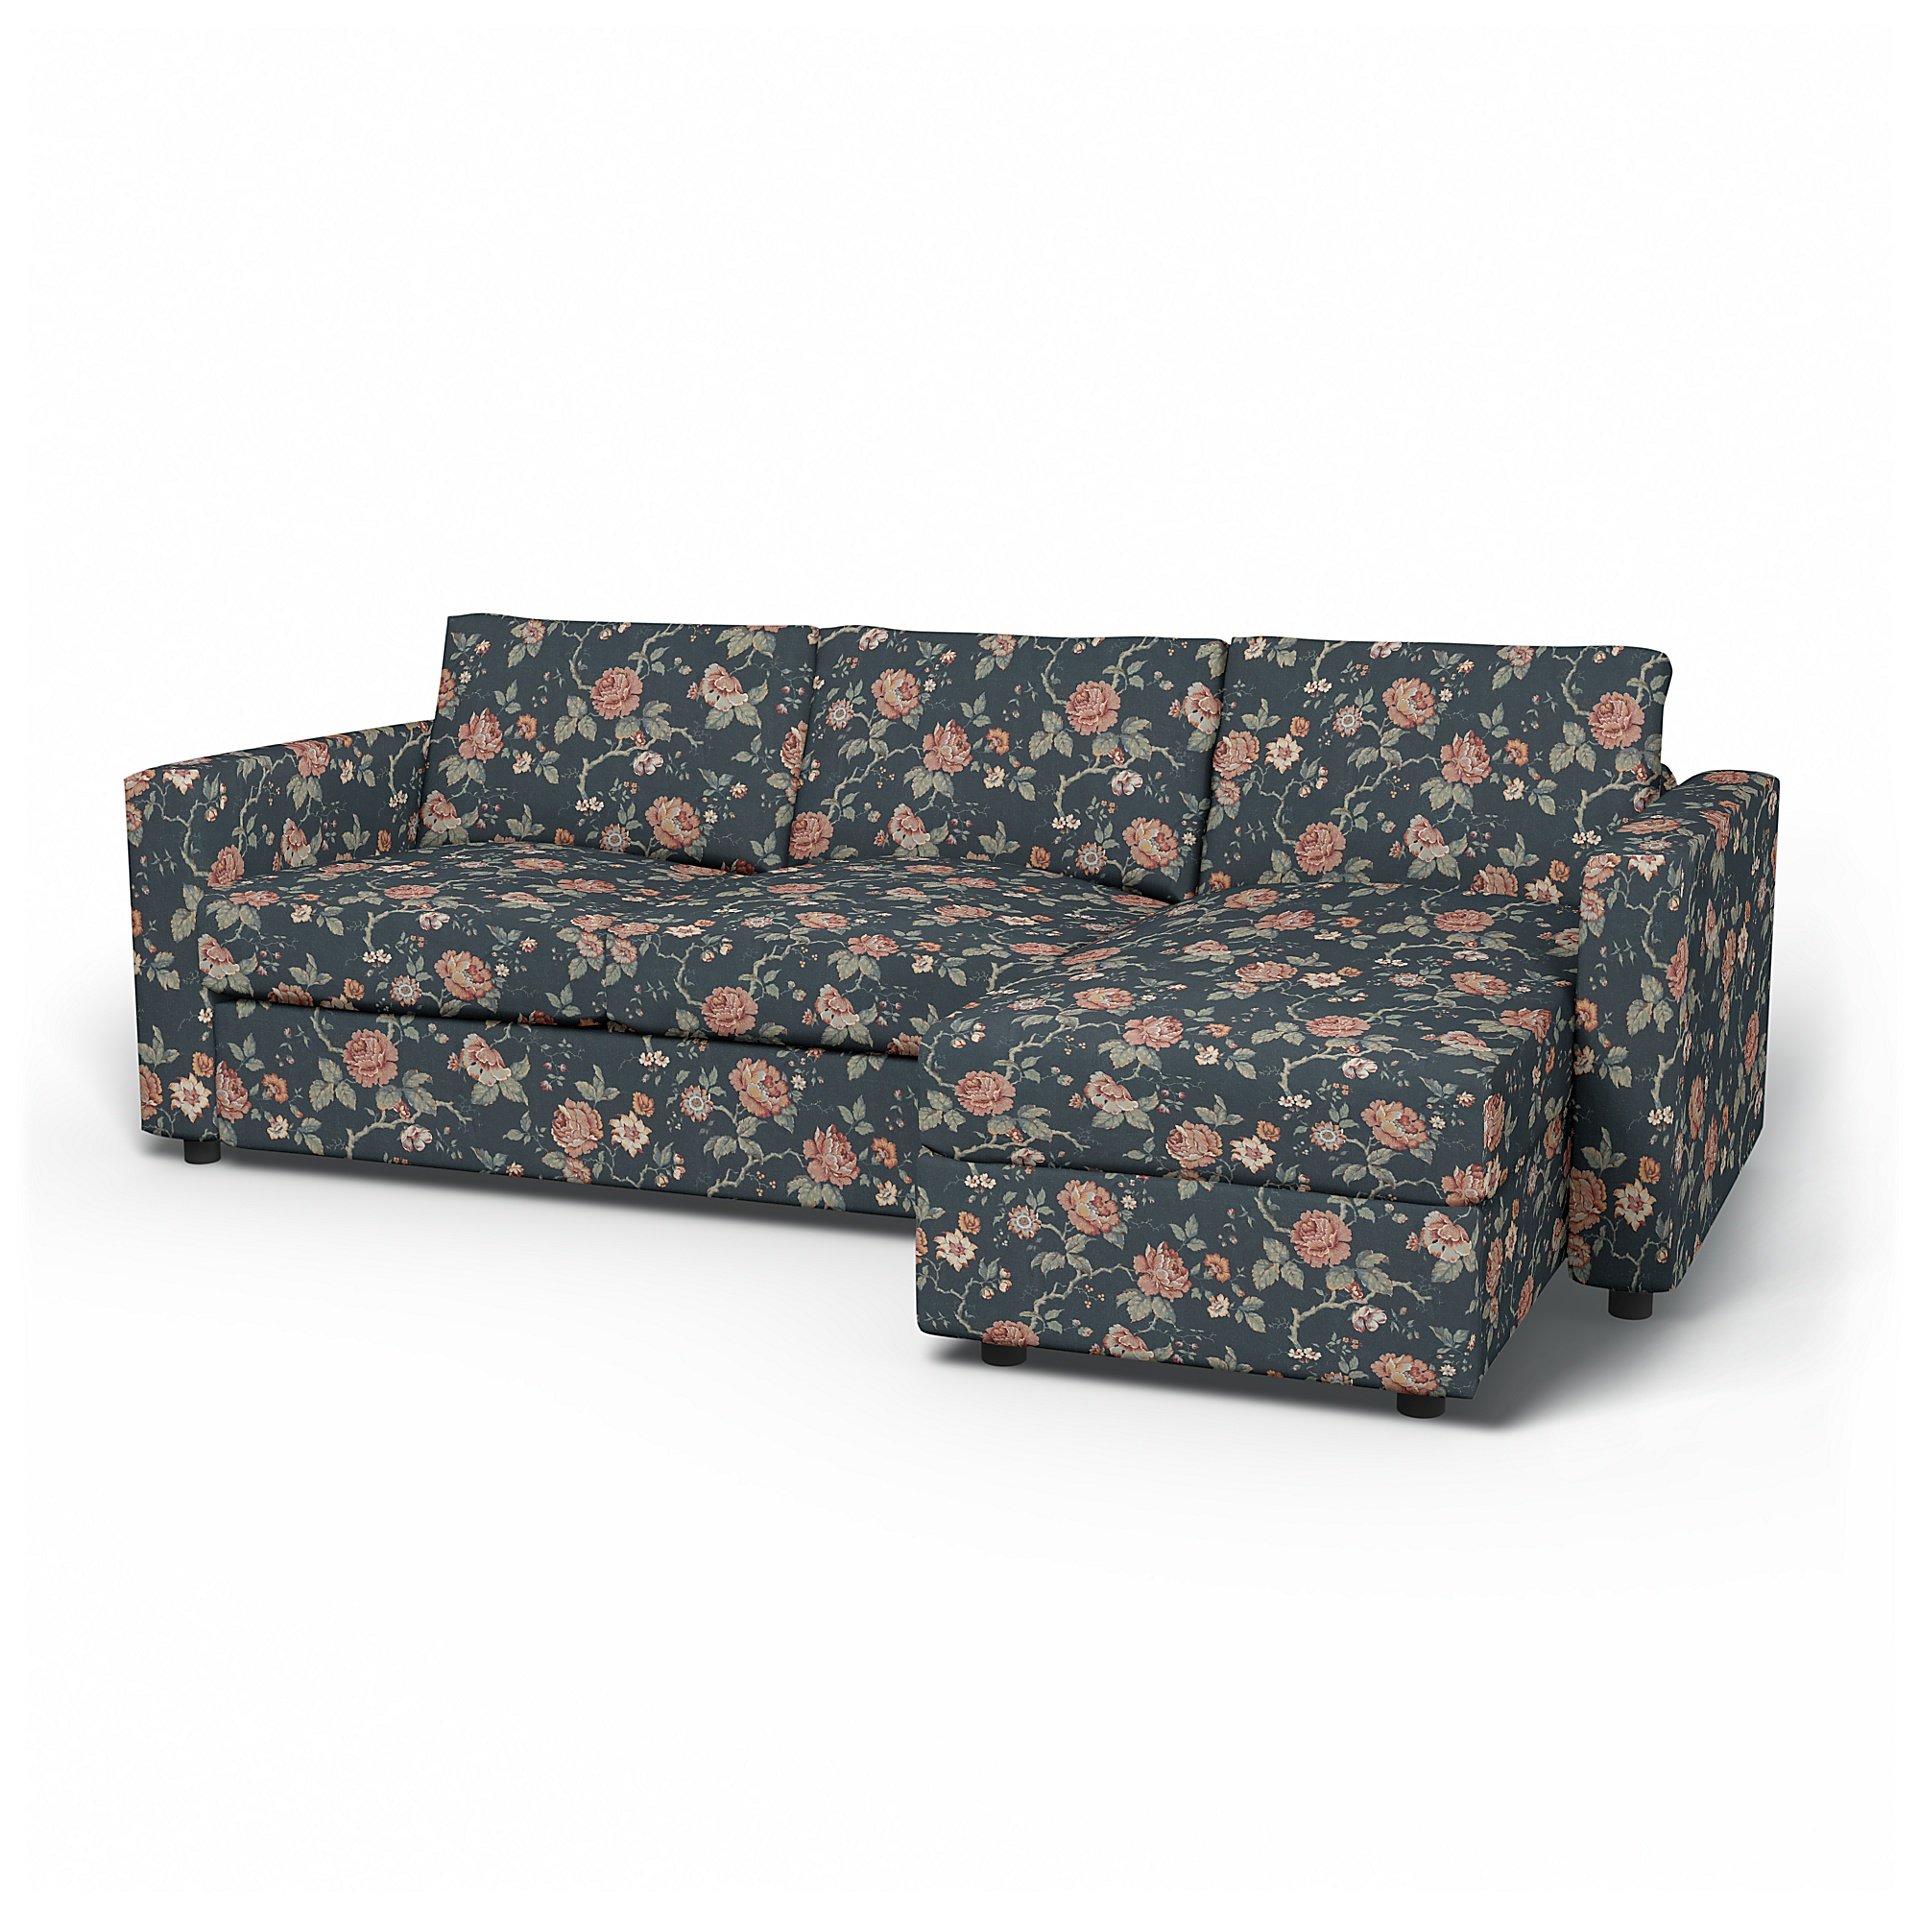 IKEA - Vimle 2 Seater Sofa with Chaise Cover, Rosentrad Dark, BEMZ x BORASTAPETER COLLECTION - Bemz